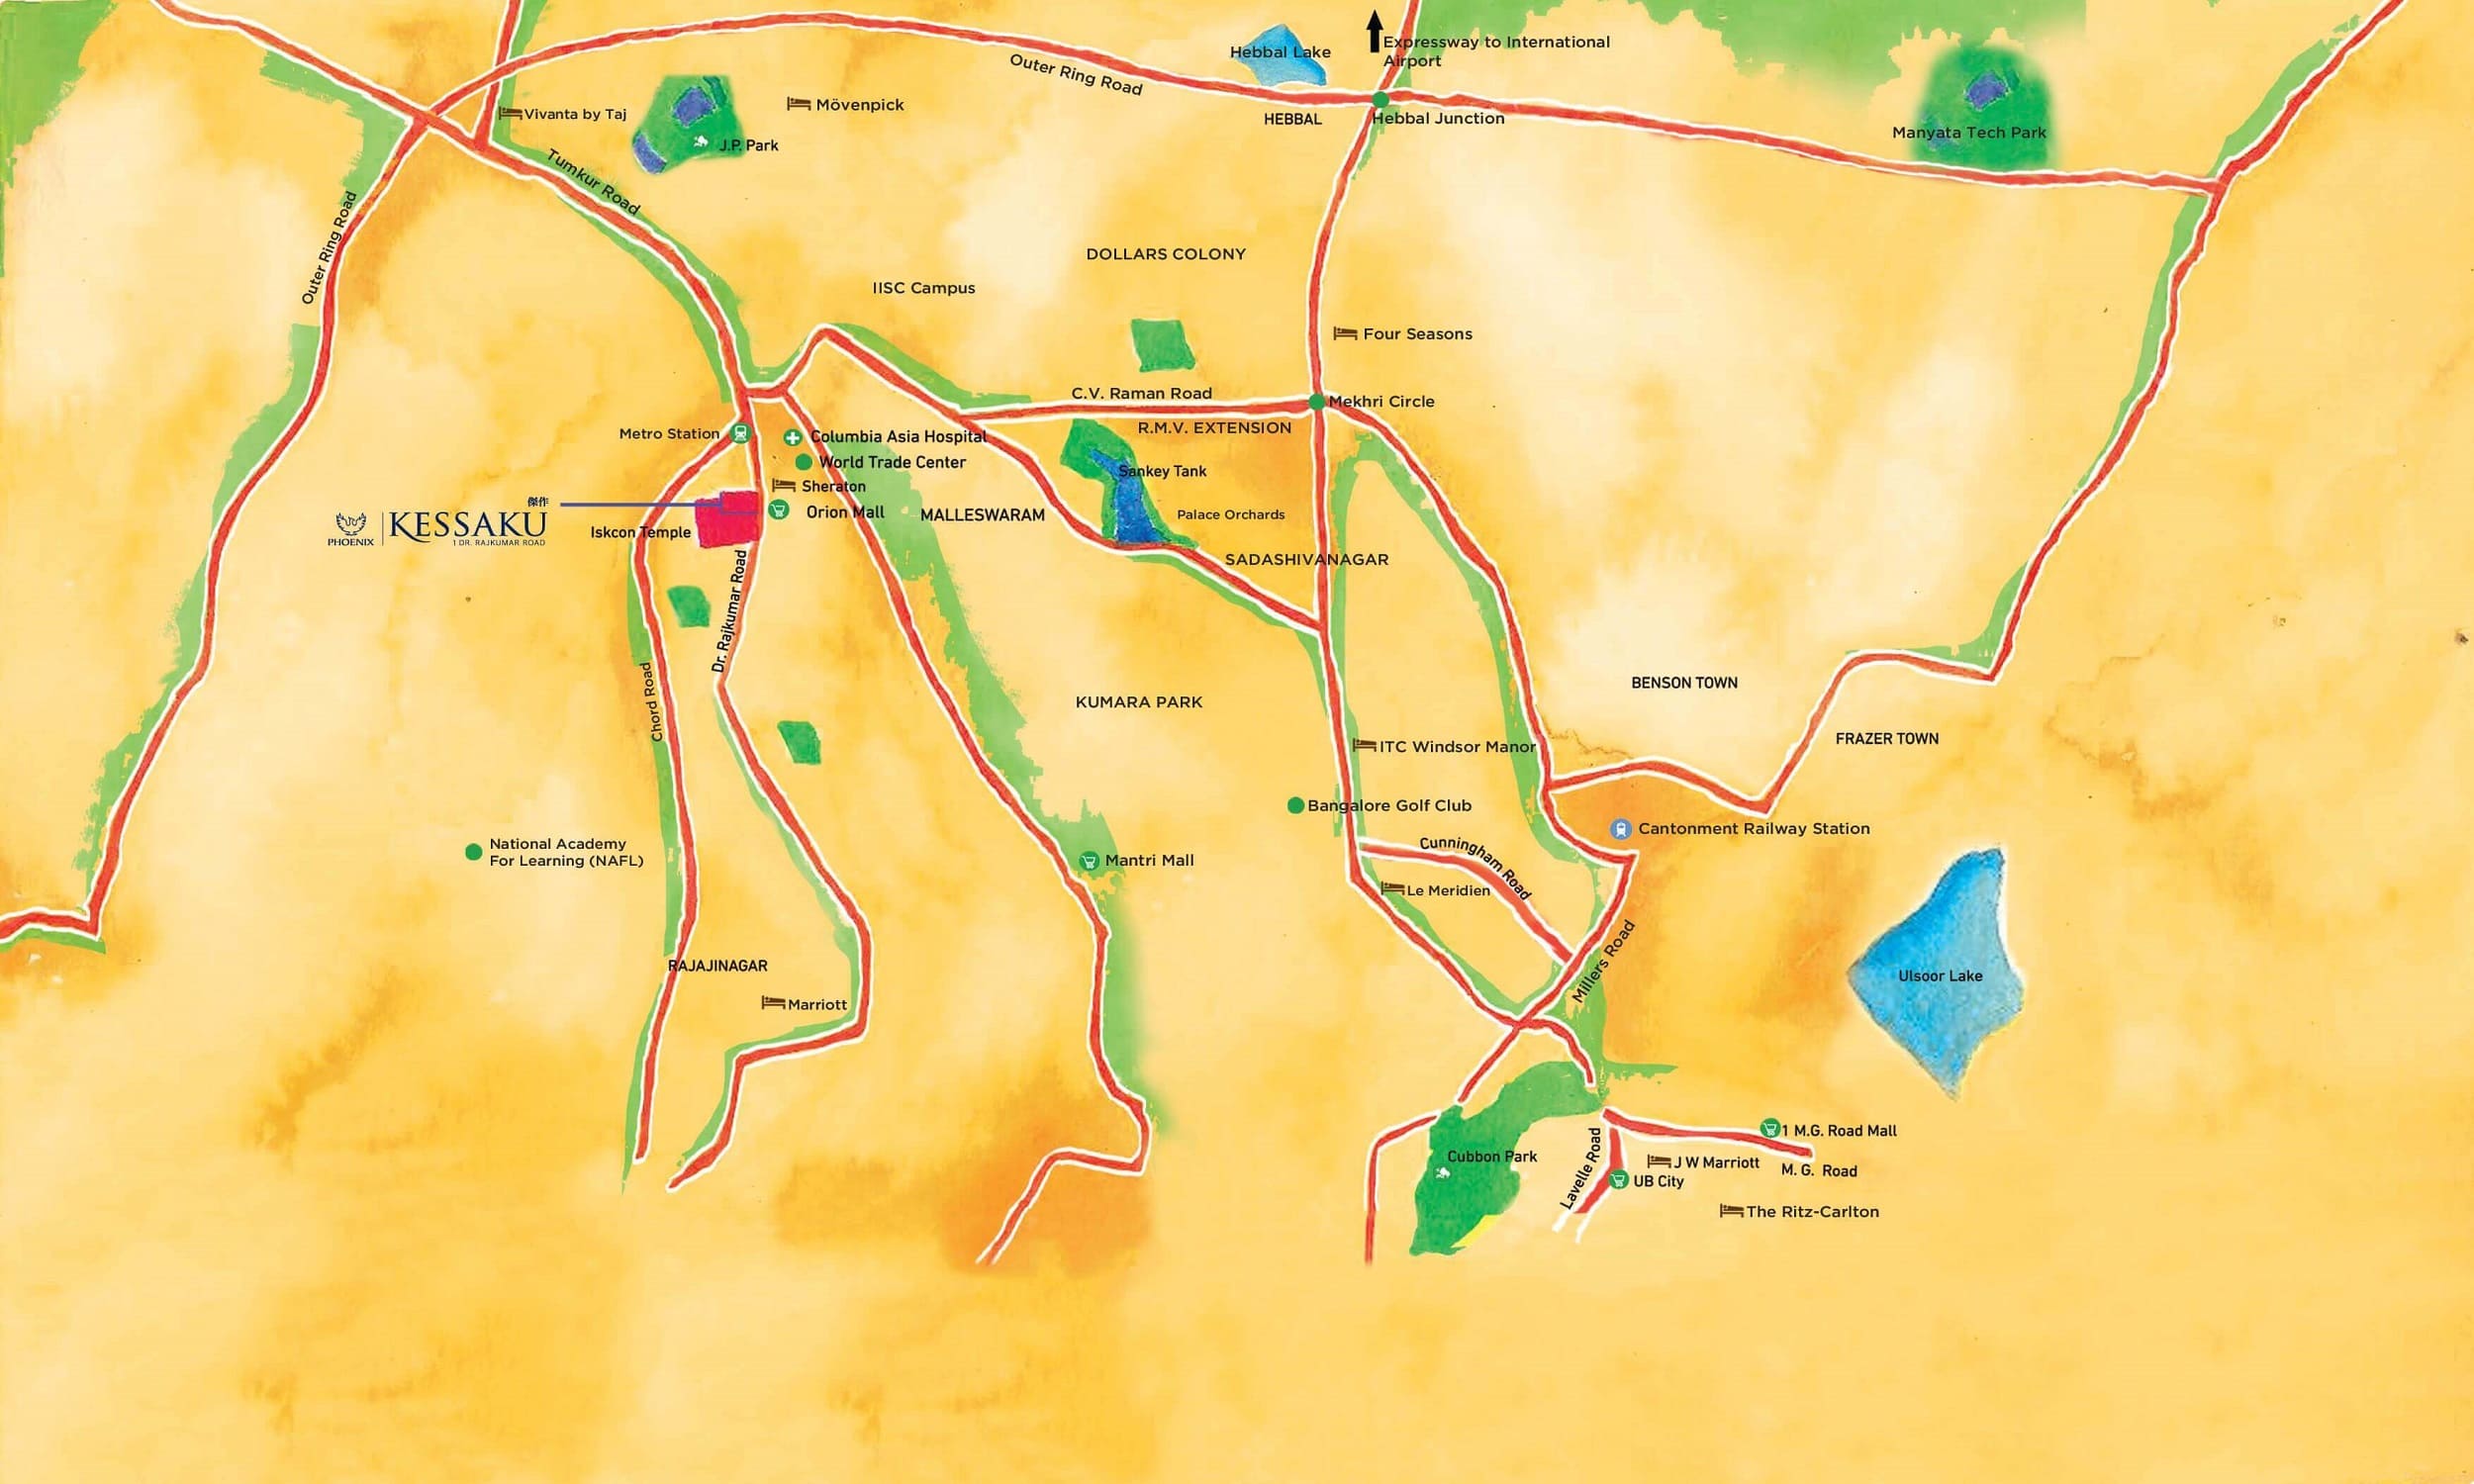 Phoenix Kessaku Rajajinagar Location Map